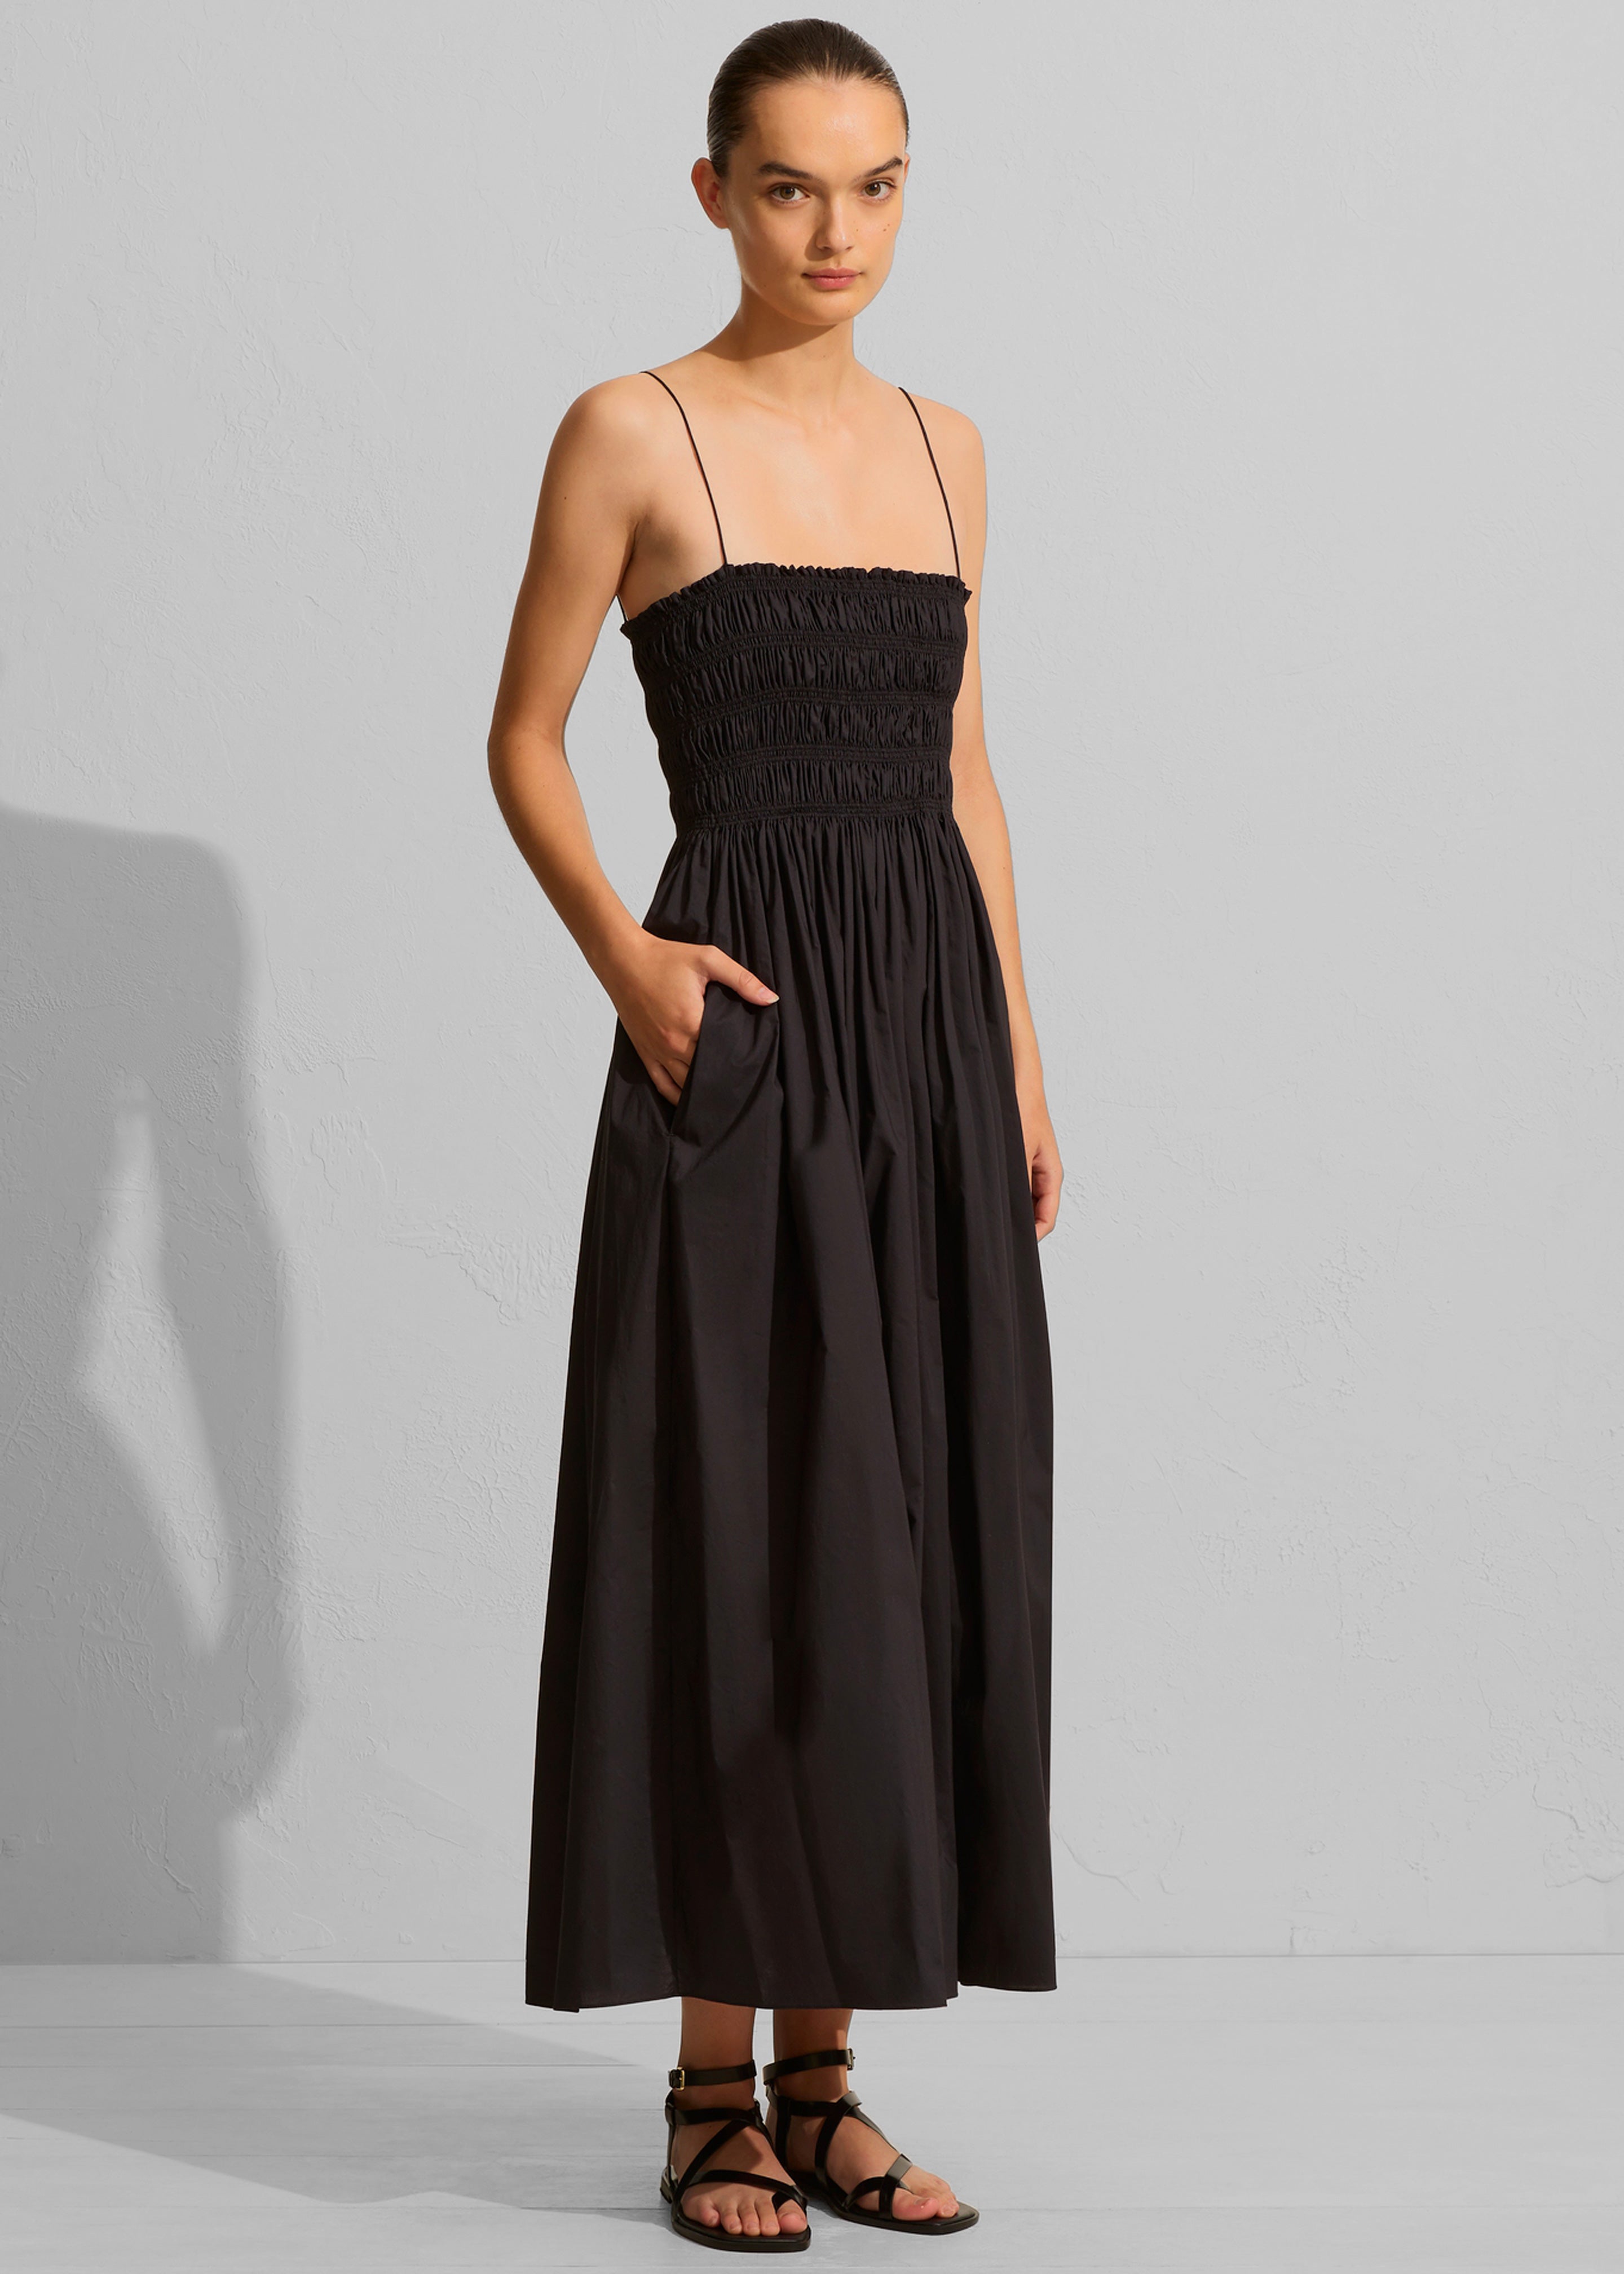 Matteau Shirred Bodice Dress - Black - 2